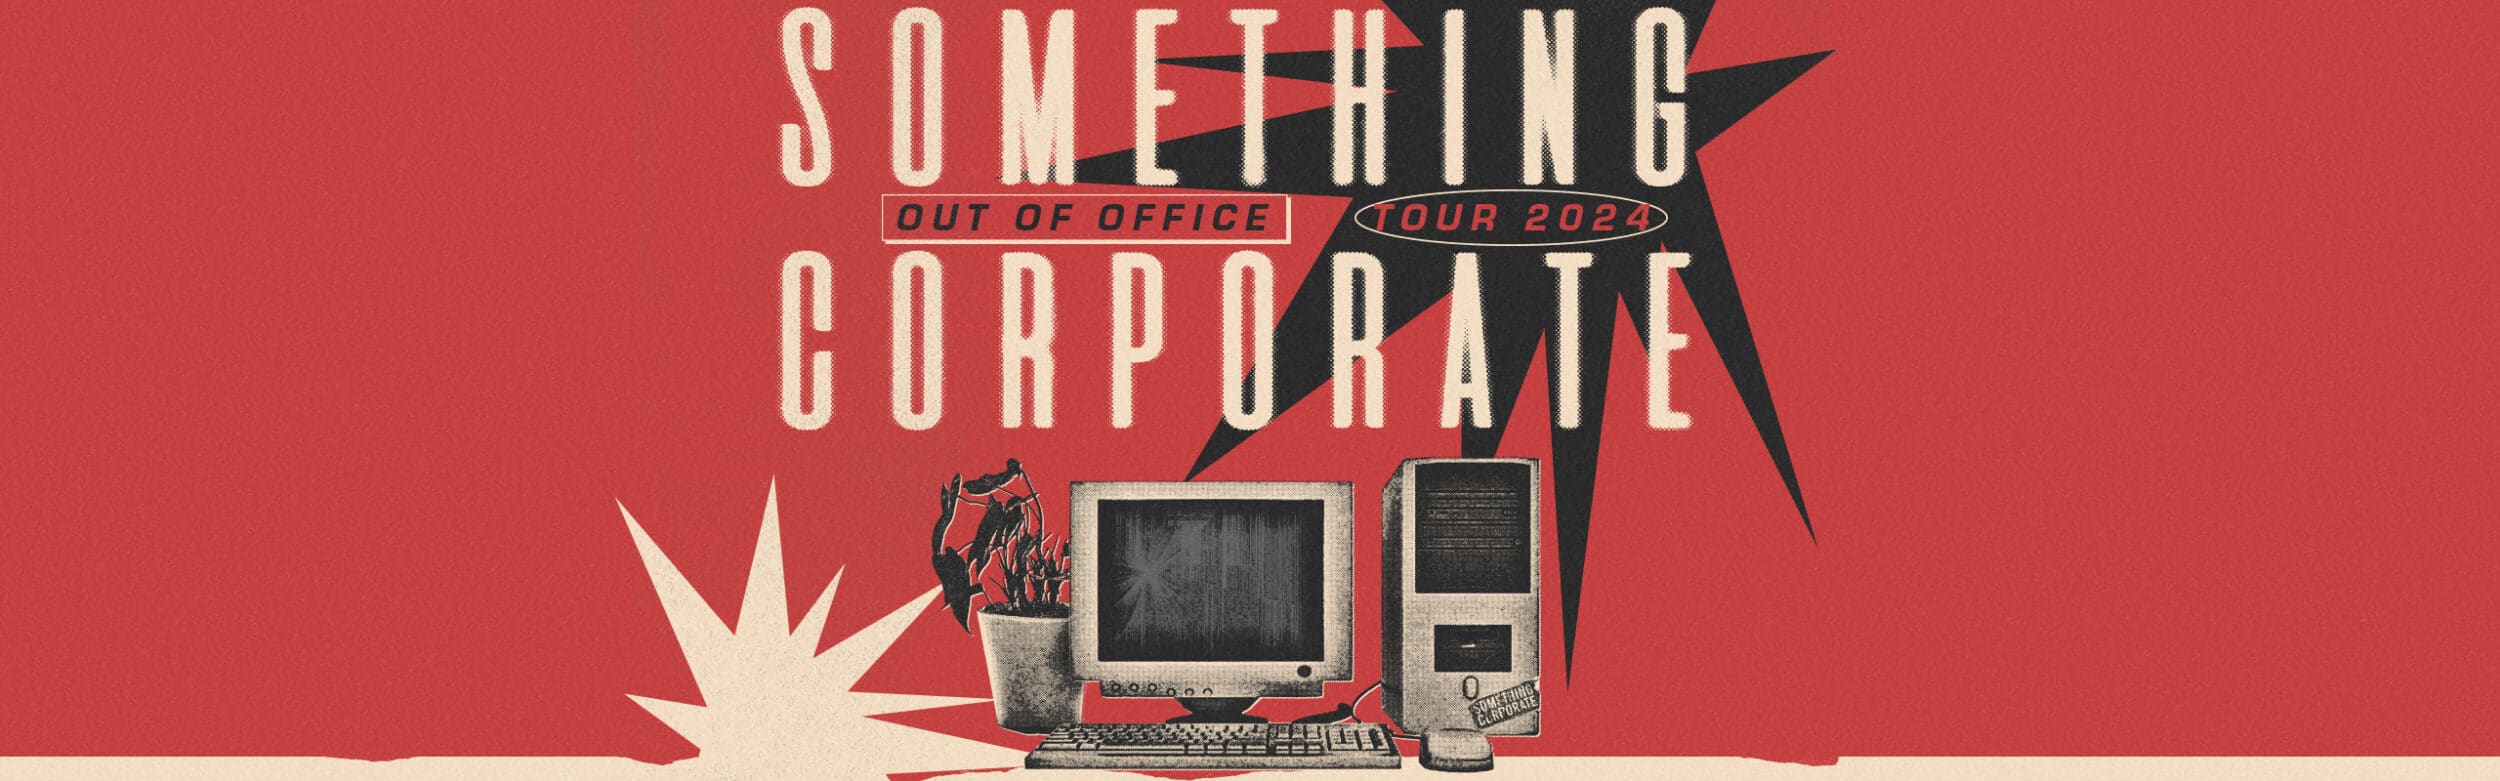 Something Corporate